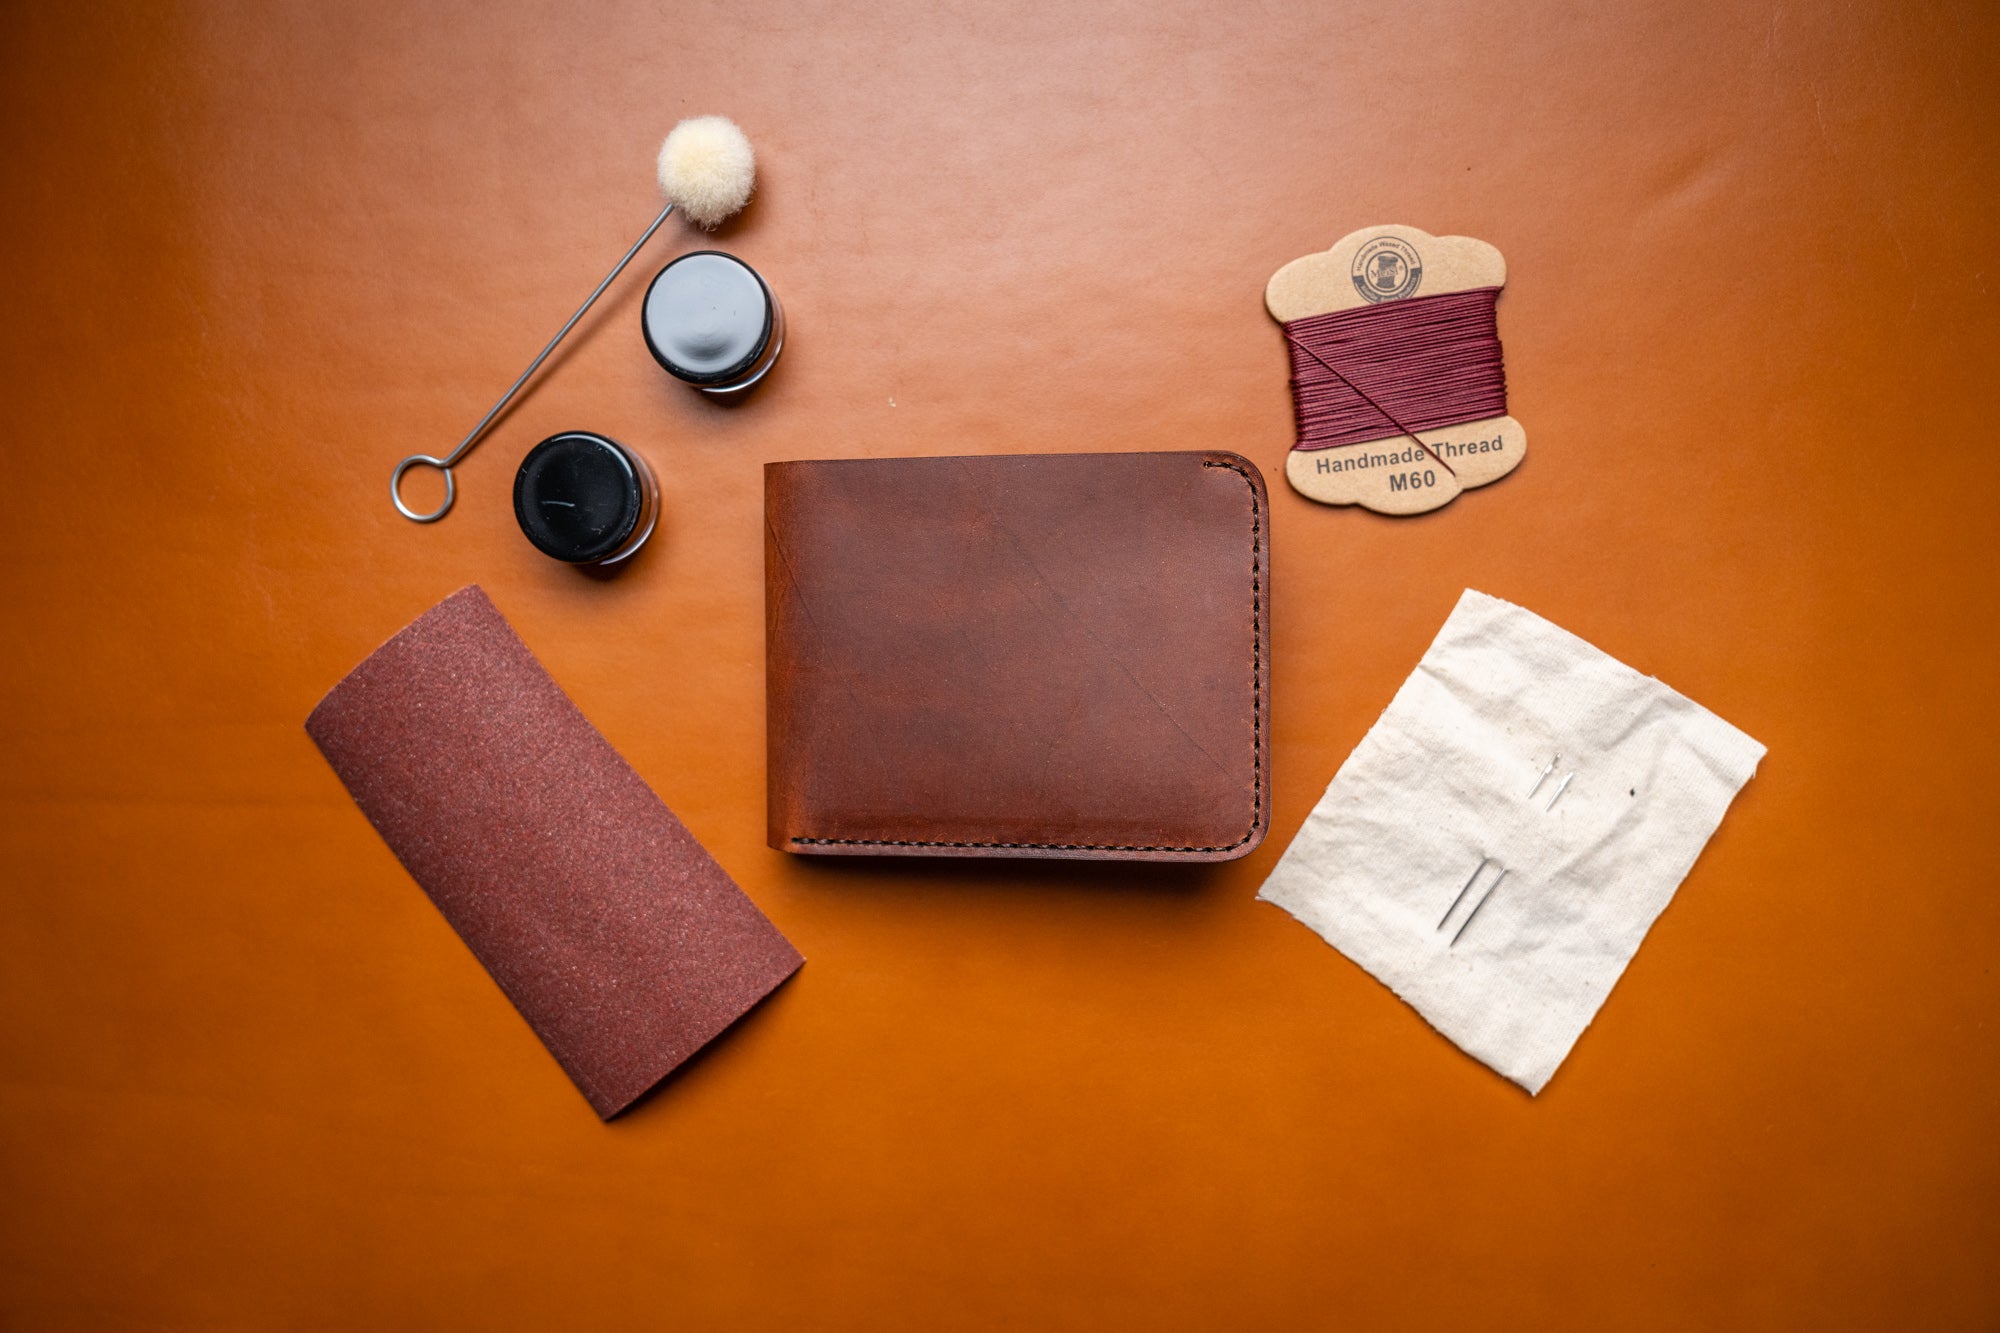 DIY Leather Wallet Kit